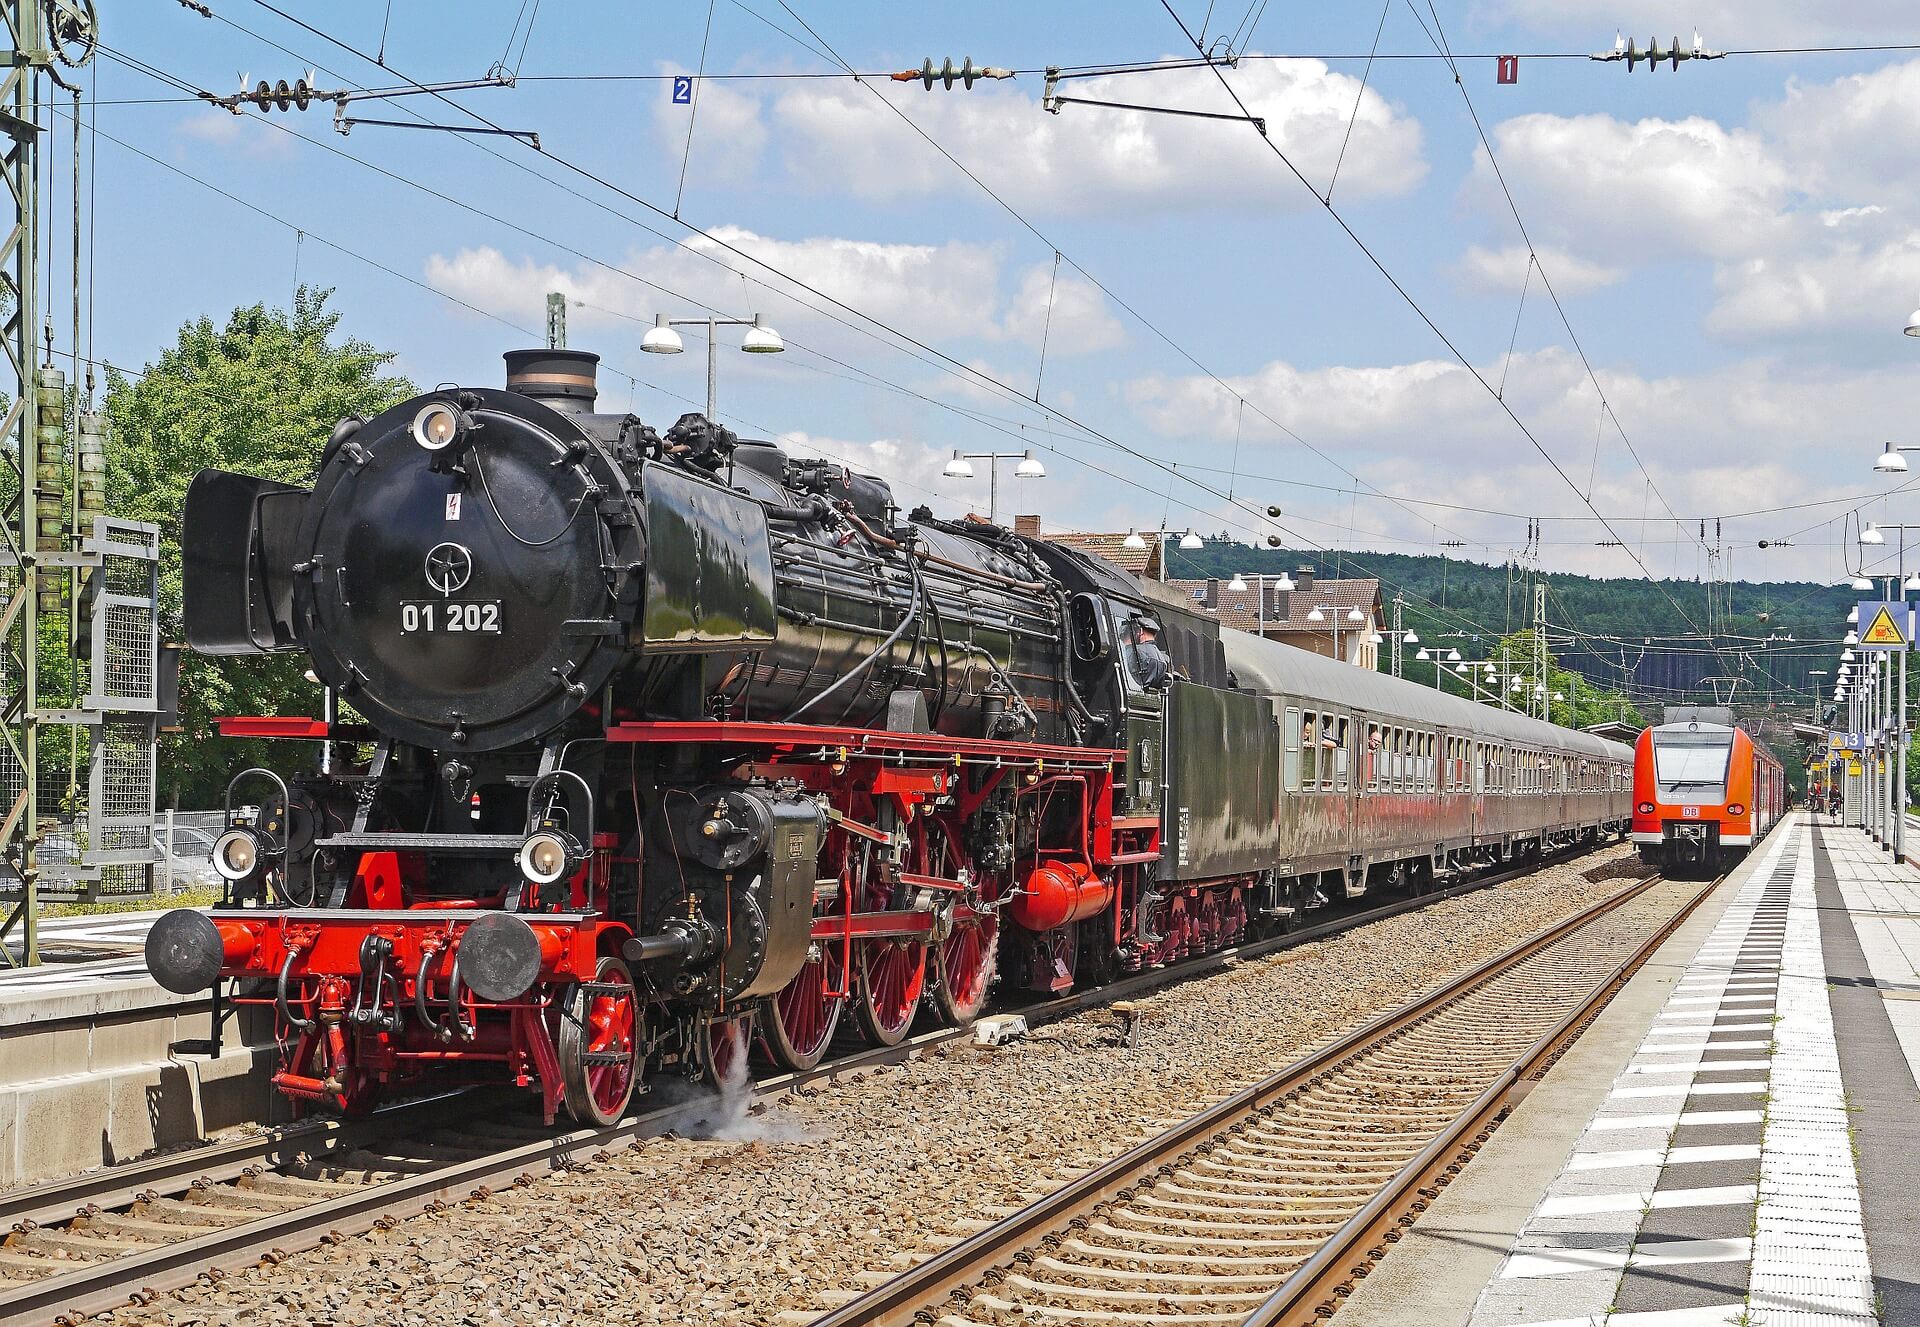 steam-locomotive-1358662_1920